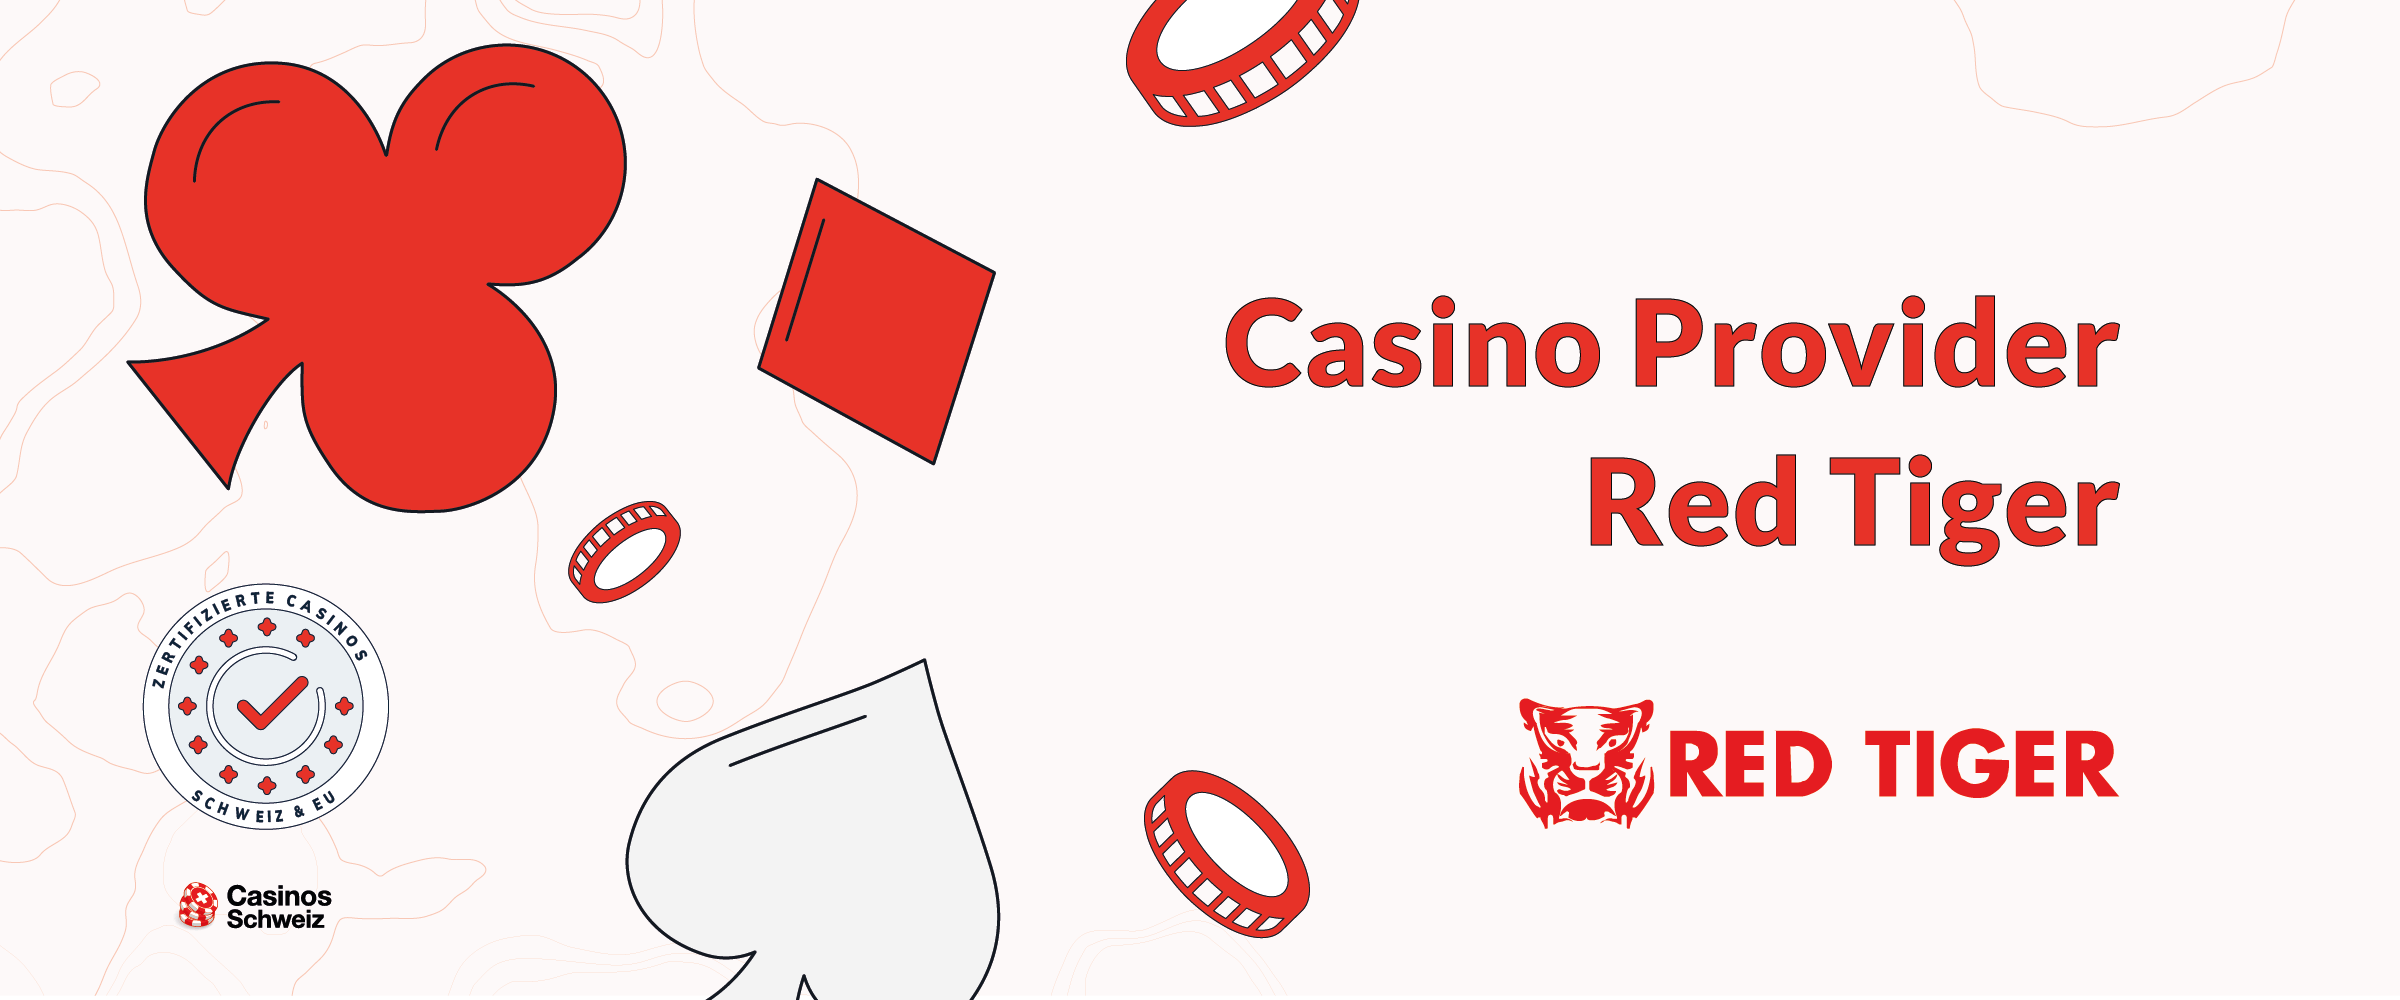 Casino Provider Red Tiger